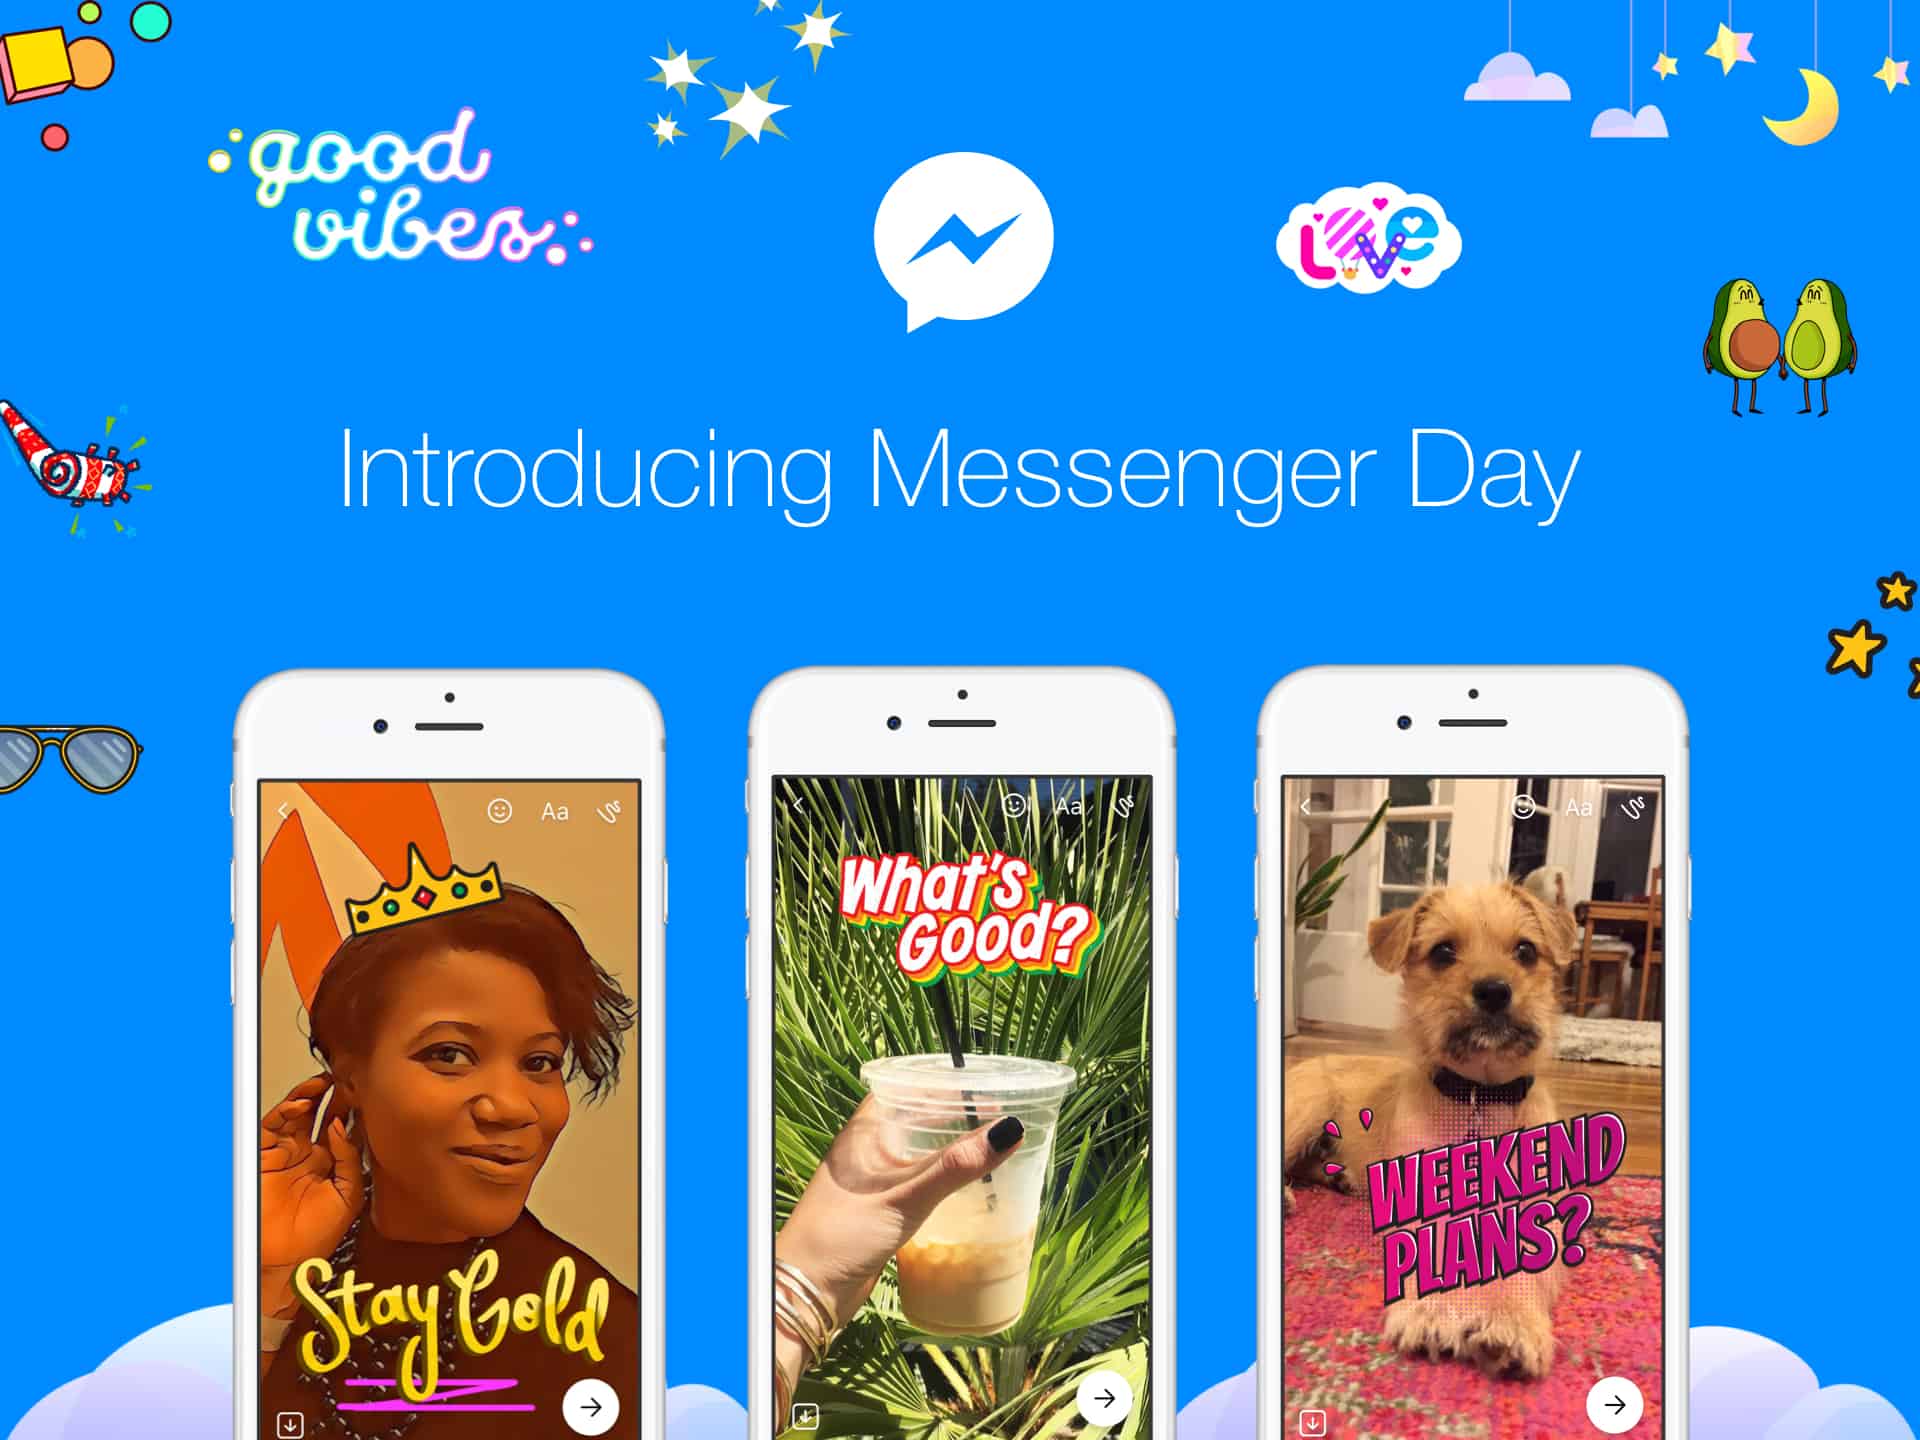 Facebook Messenger Day